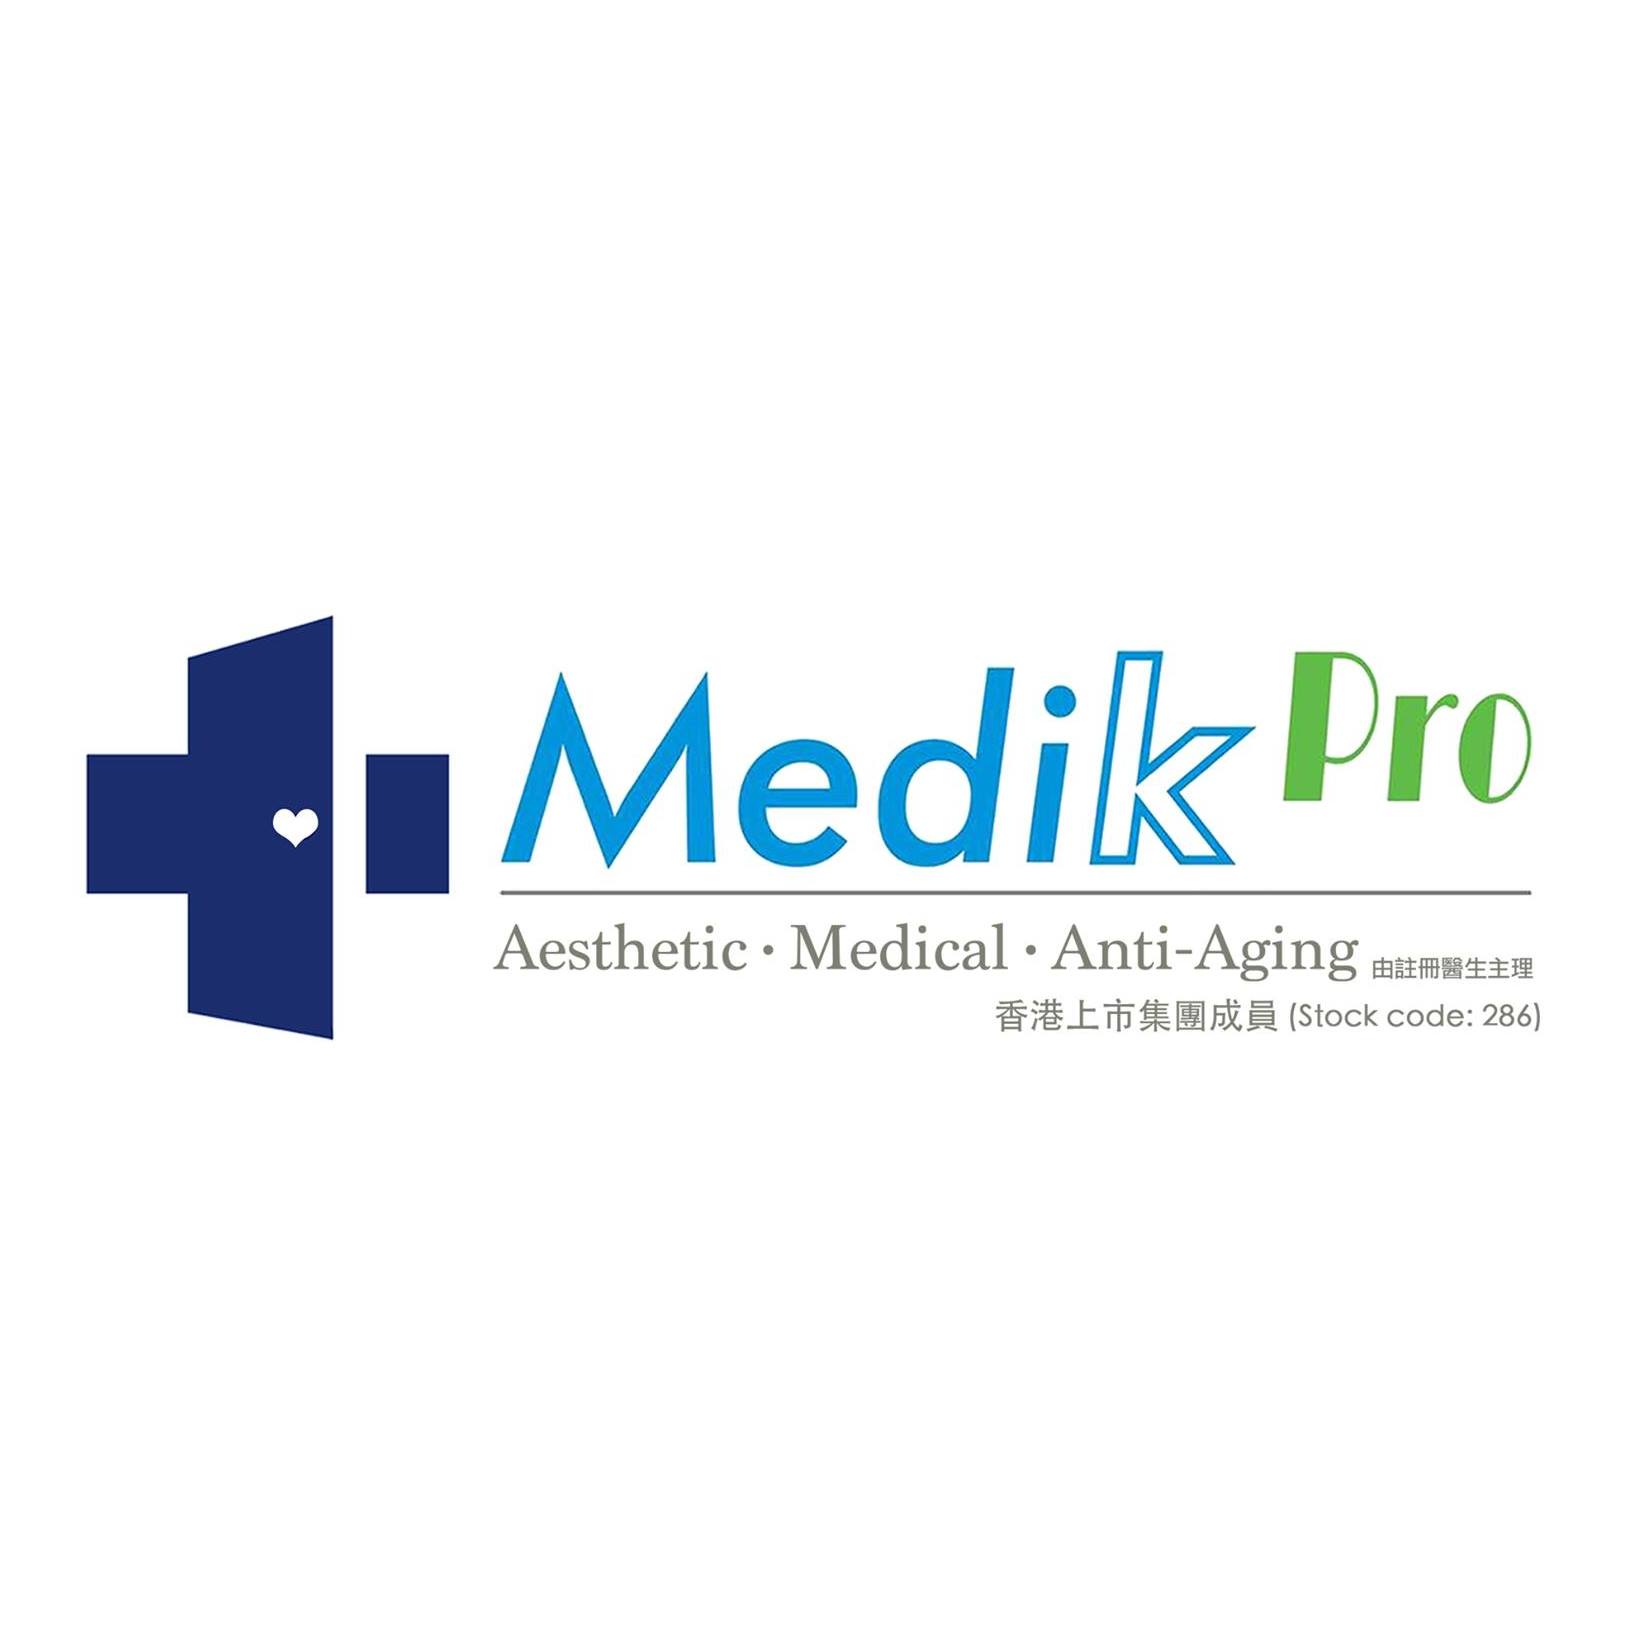 : Medik Pro (佐敦分店)